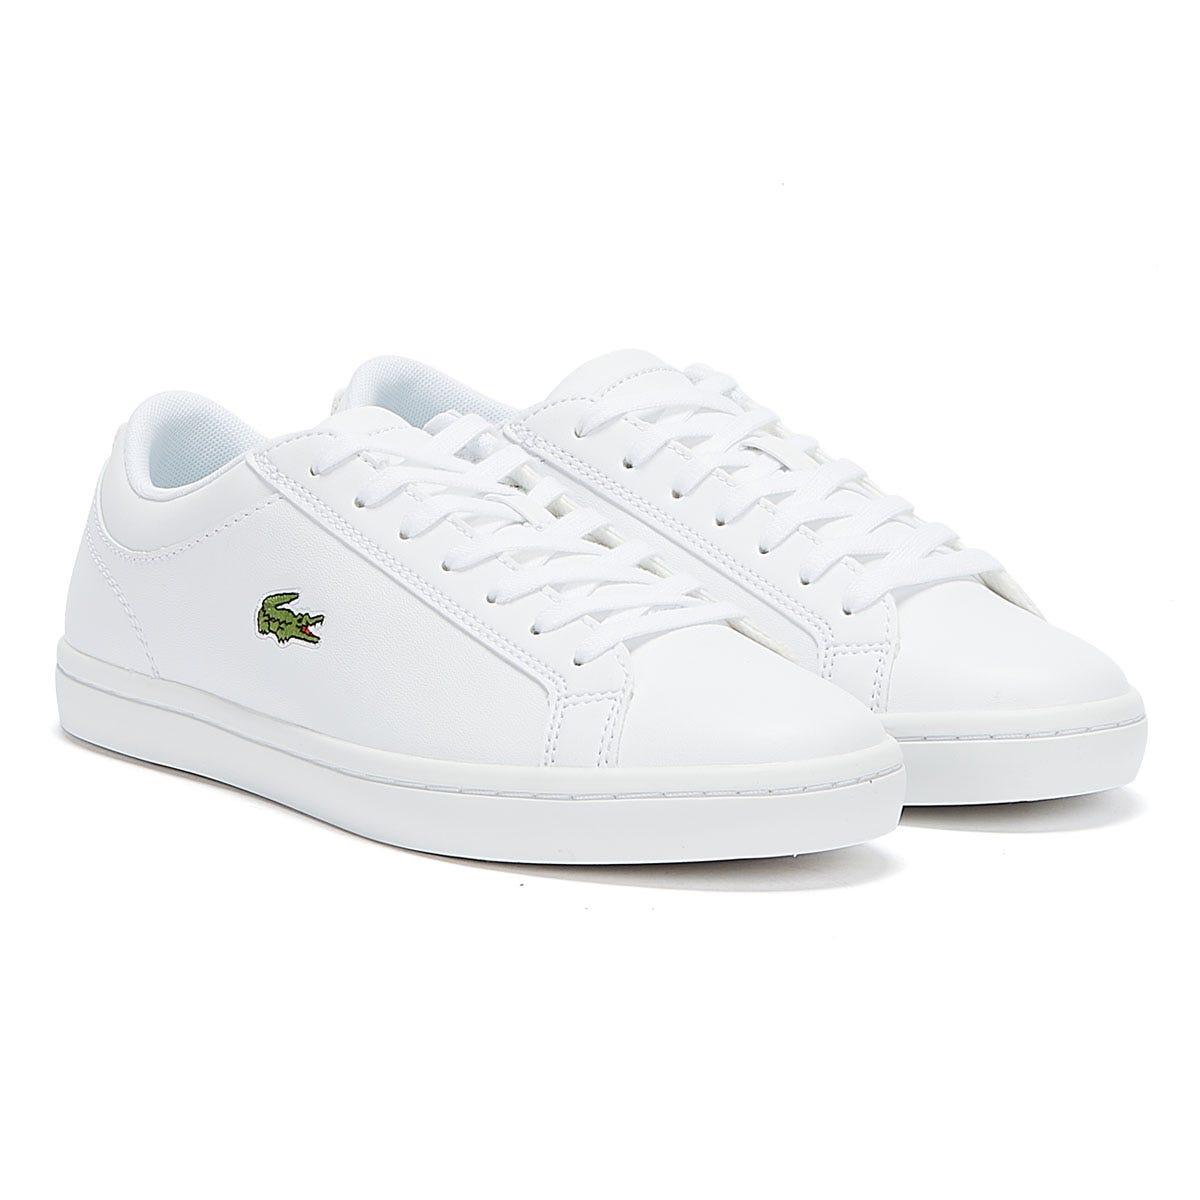 lacoste white ladies shoes